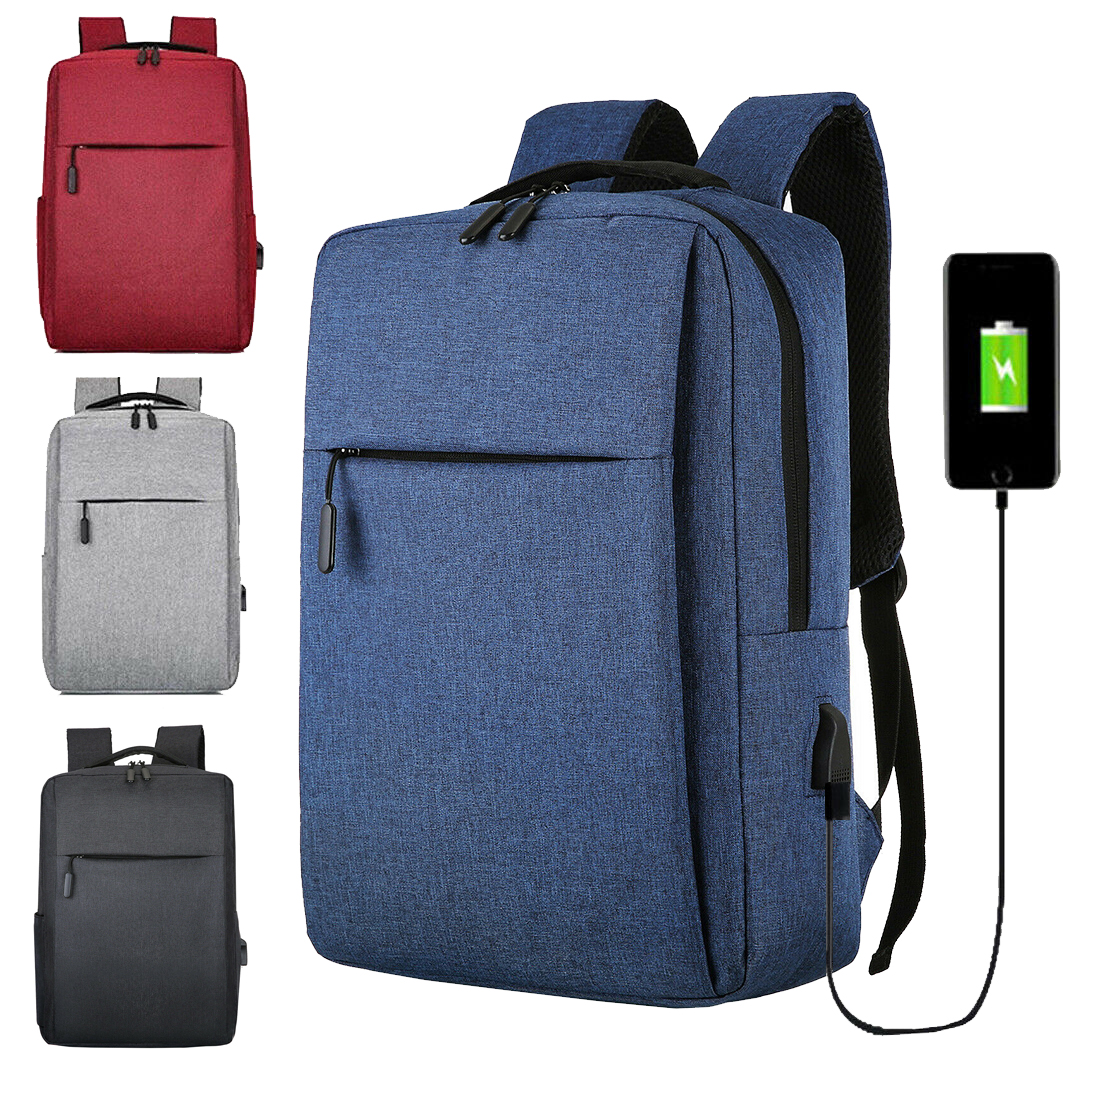 Novaa Bags 16" Slim Casual Waterproof Laptop Backpack with USB Charging Port Navy - image 1 of 6